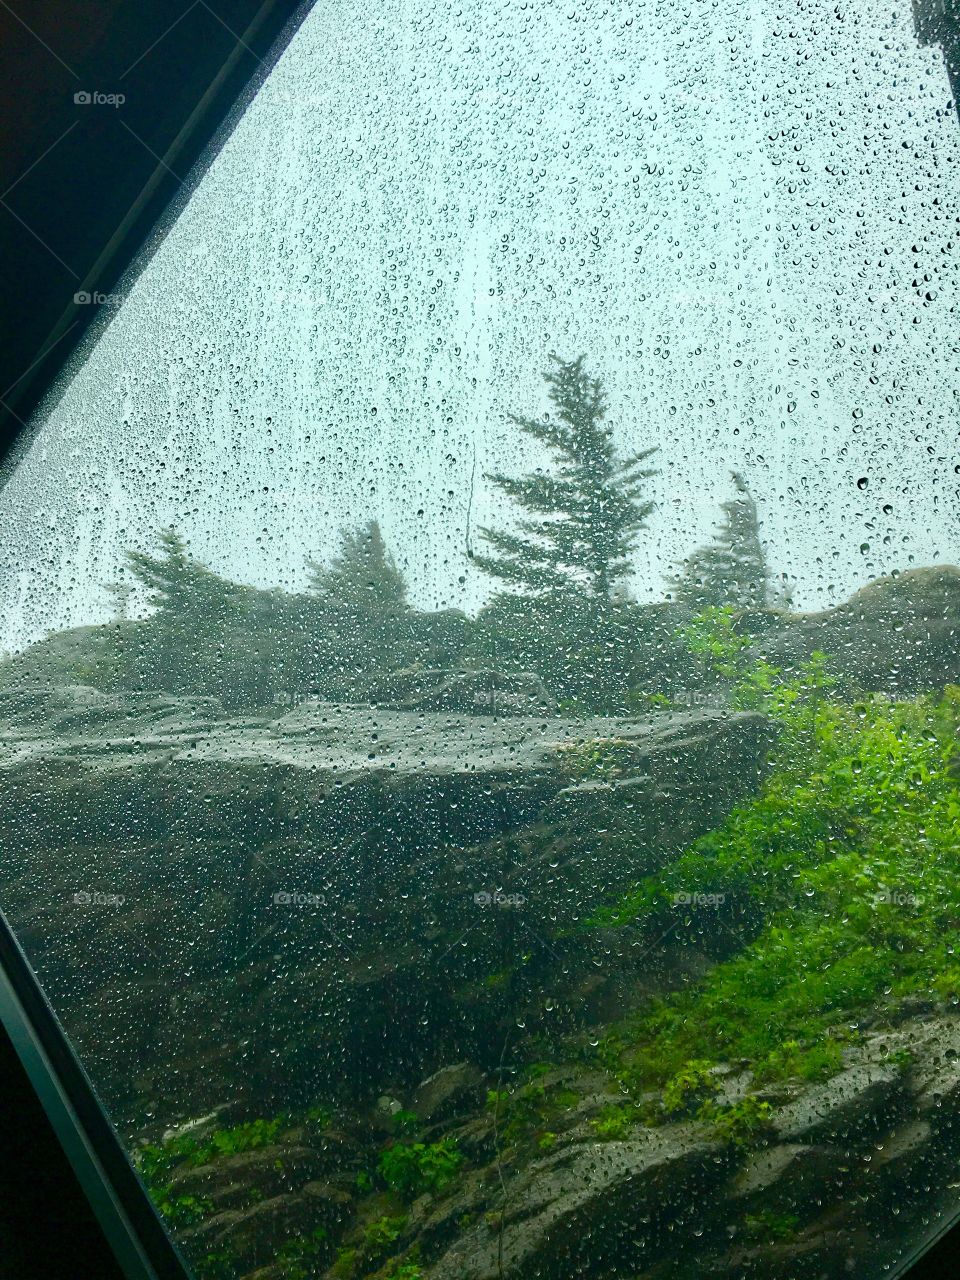 Raining Day on the mountain